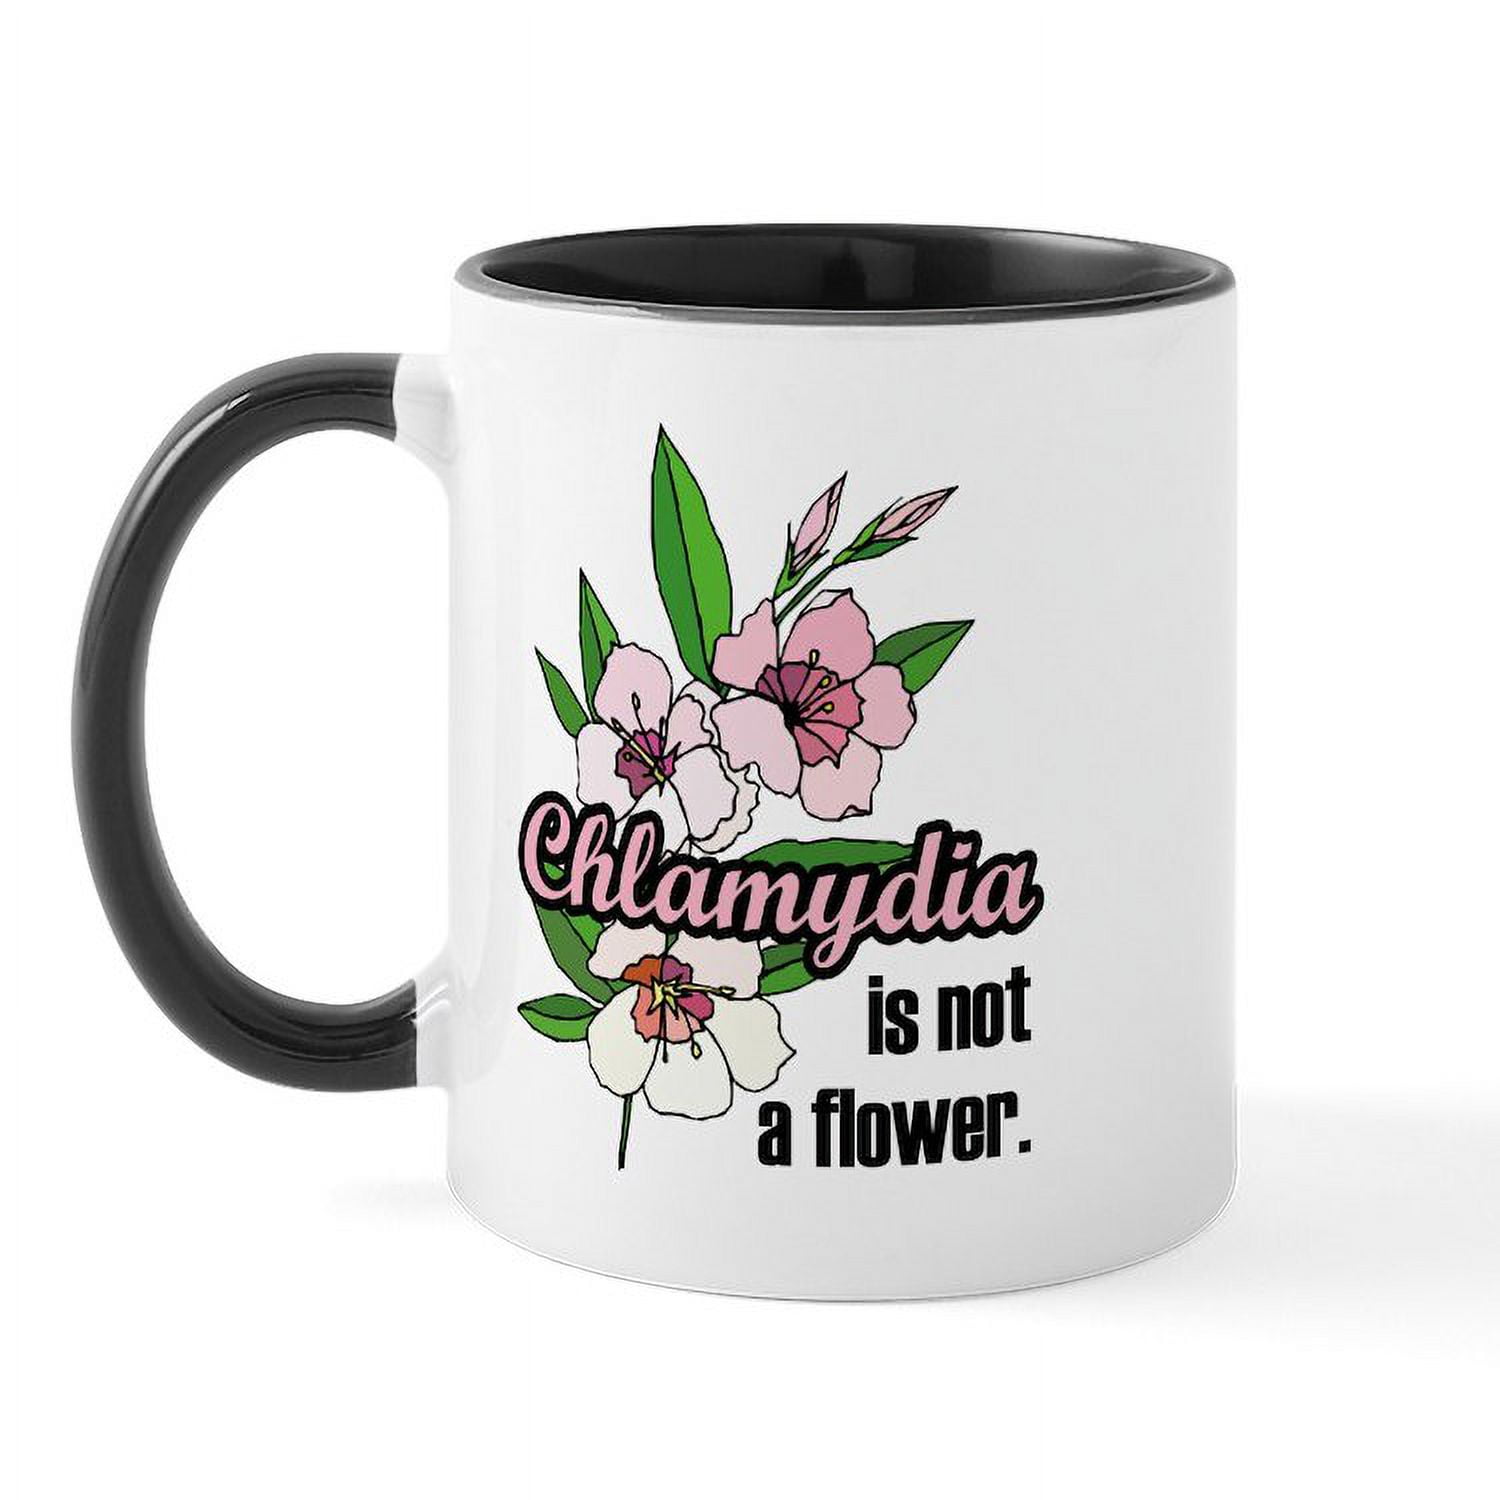 Cafepress - My Little Pony Rainbow Dash Flowers Mugs - 11 oz Ceramic Mug - Novelty Coffee Tea Cup, Size: Small, Blue